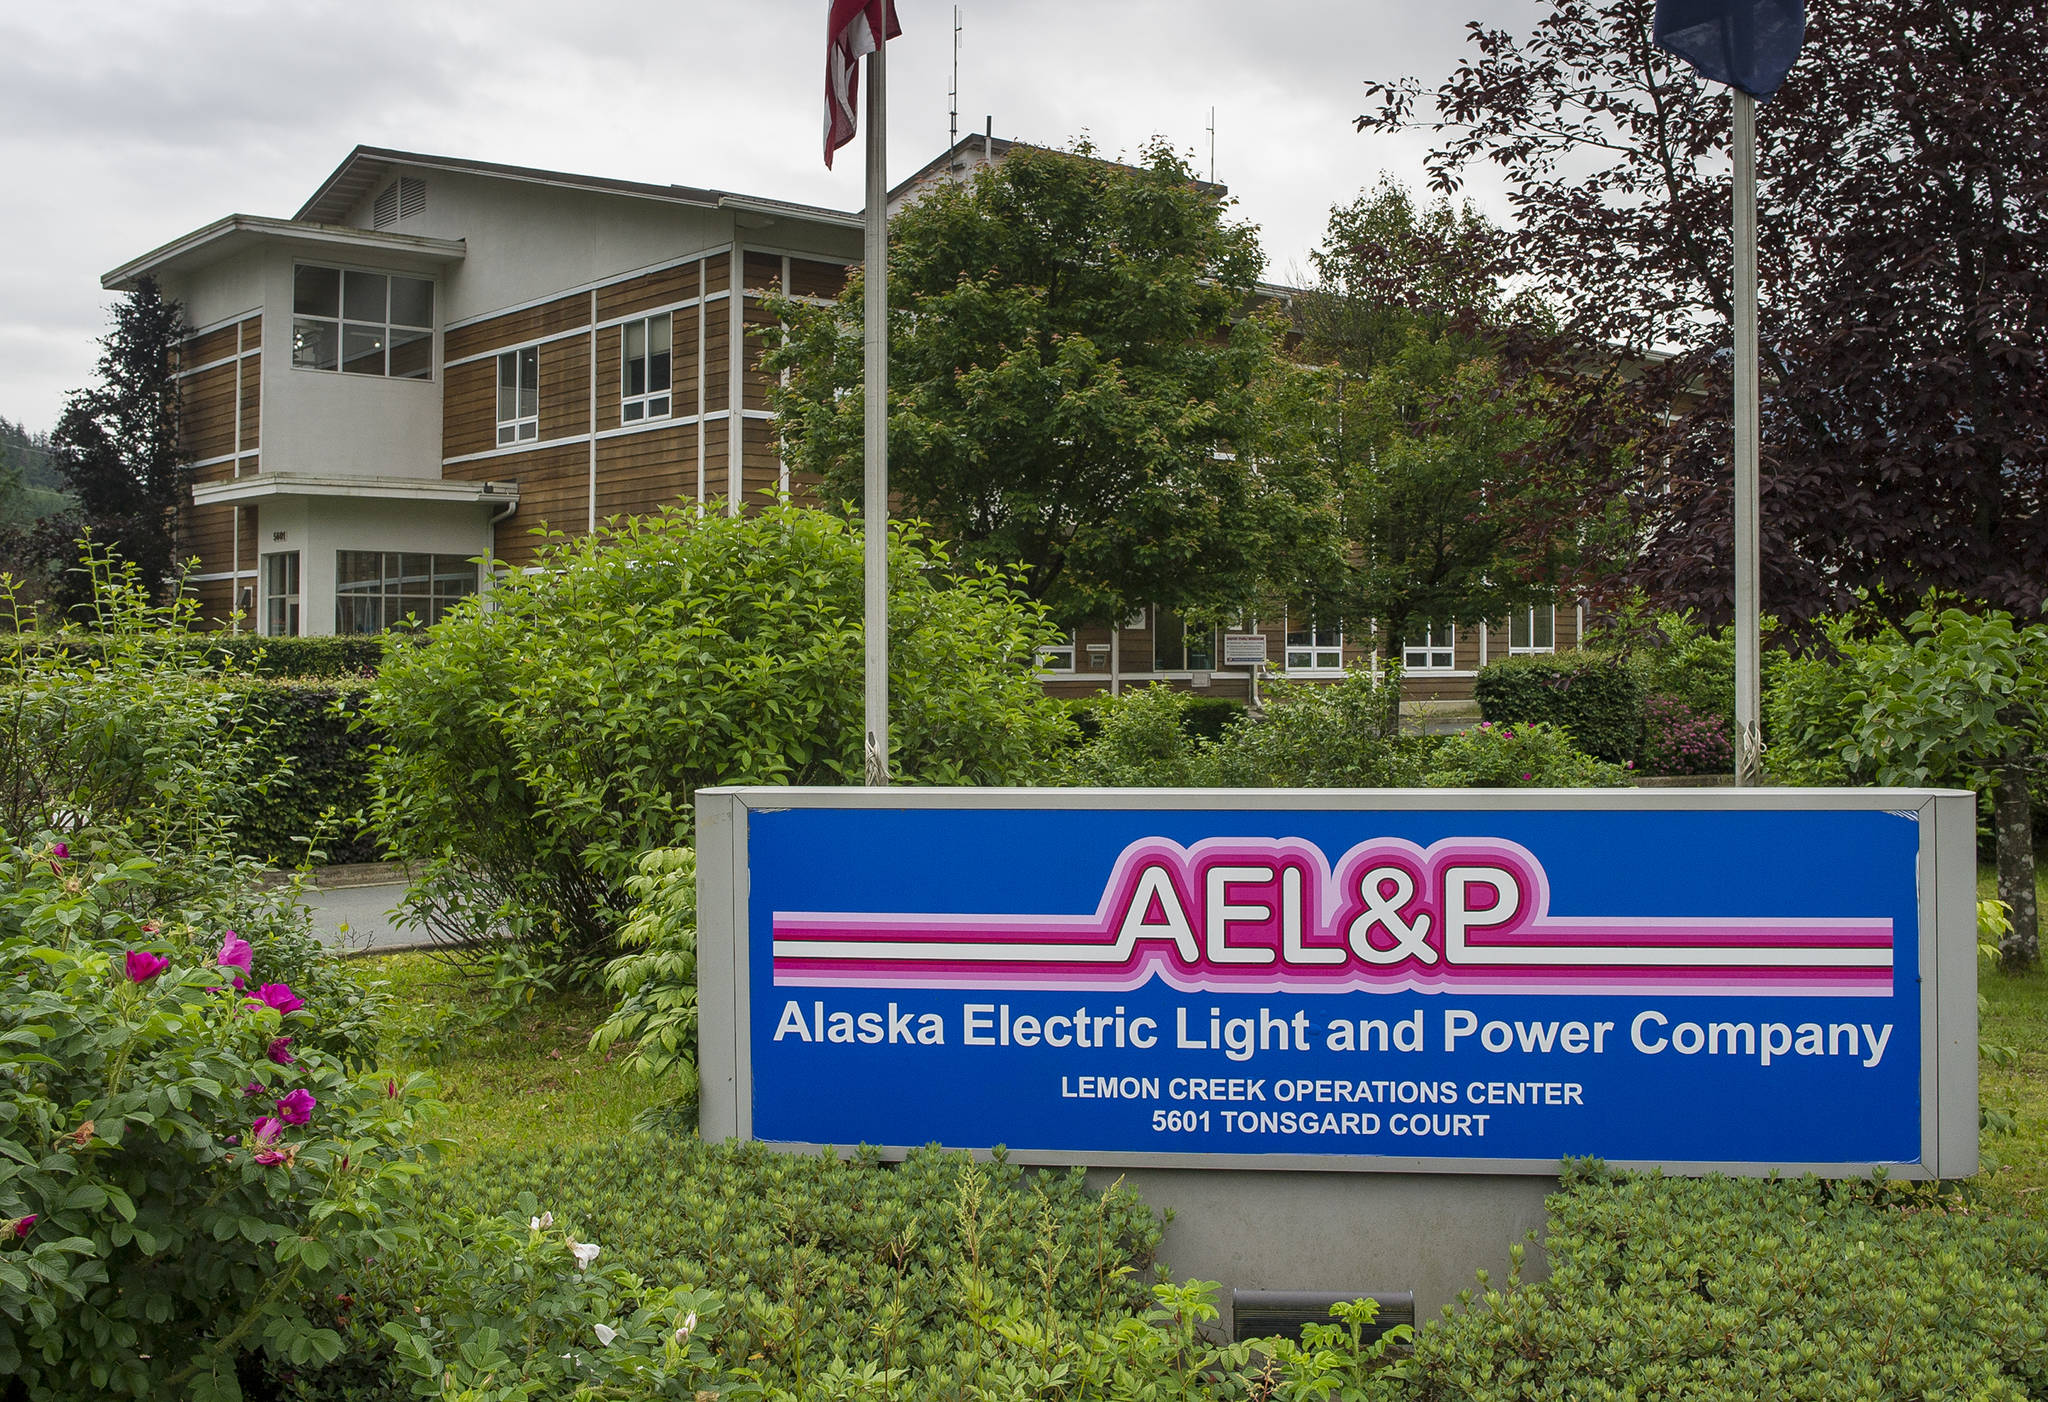 Alaska Electric Light and Power Company Lemon Creek operations center in Juneau on Wednesday, July 19, 2017. (Michael Penn | Juneau Empire)